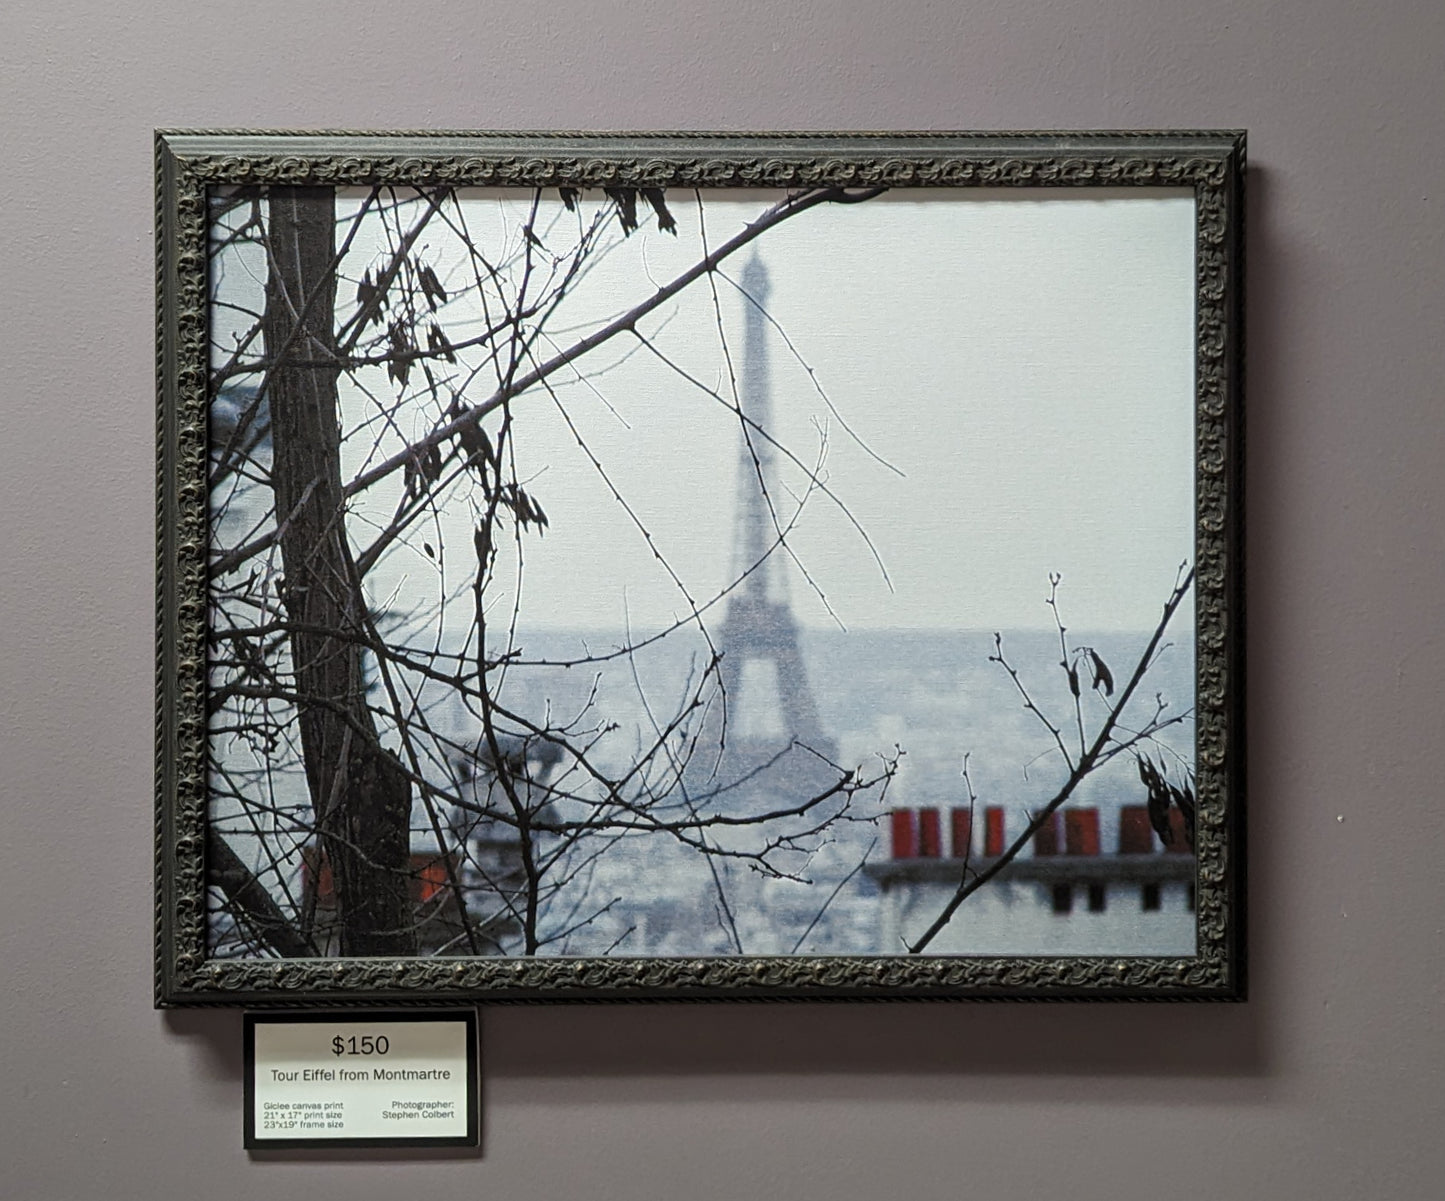 Tour Eiffel from Montmartre framed canvas